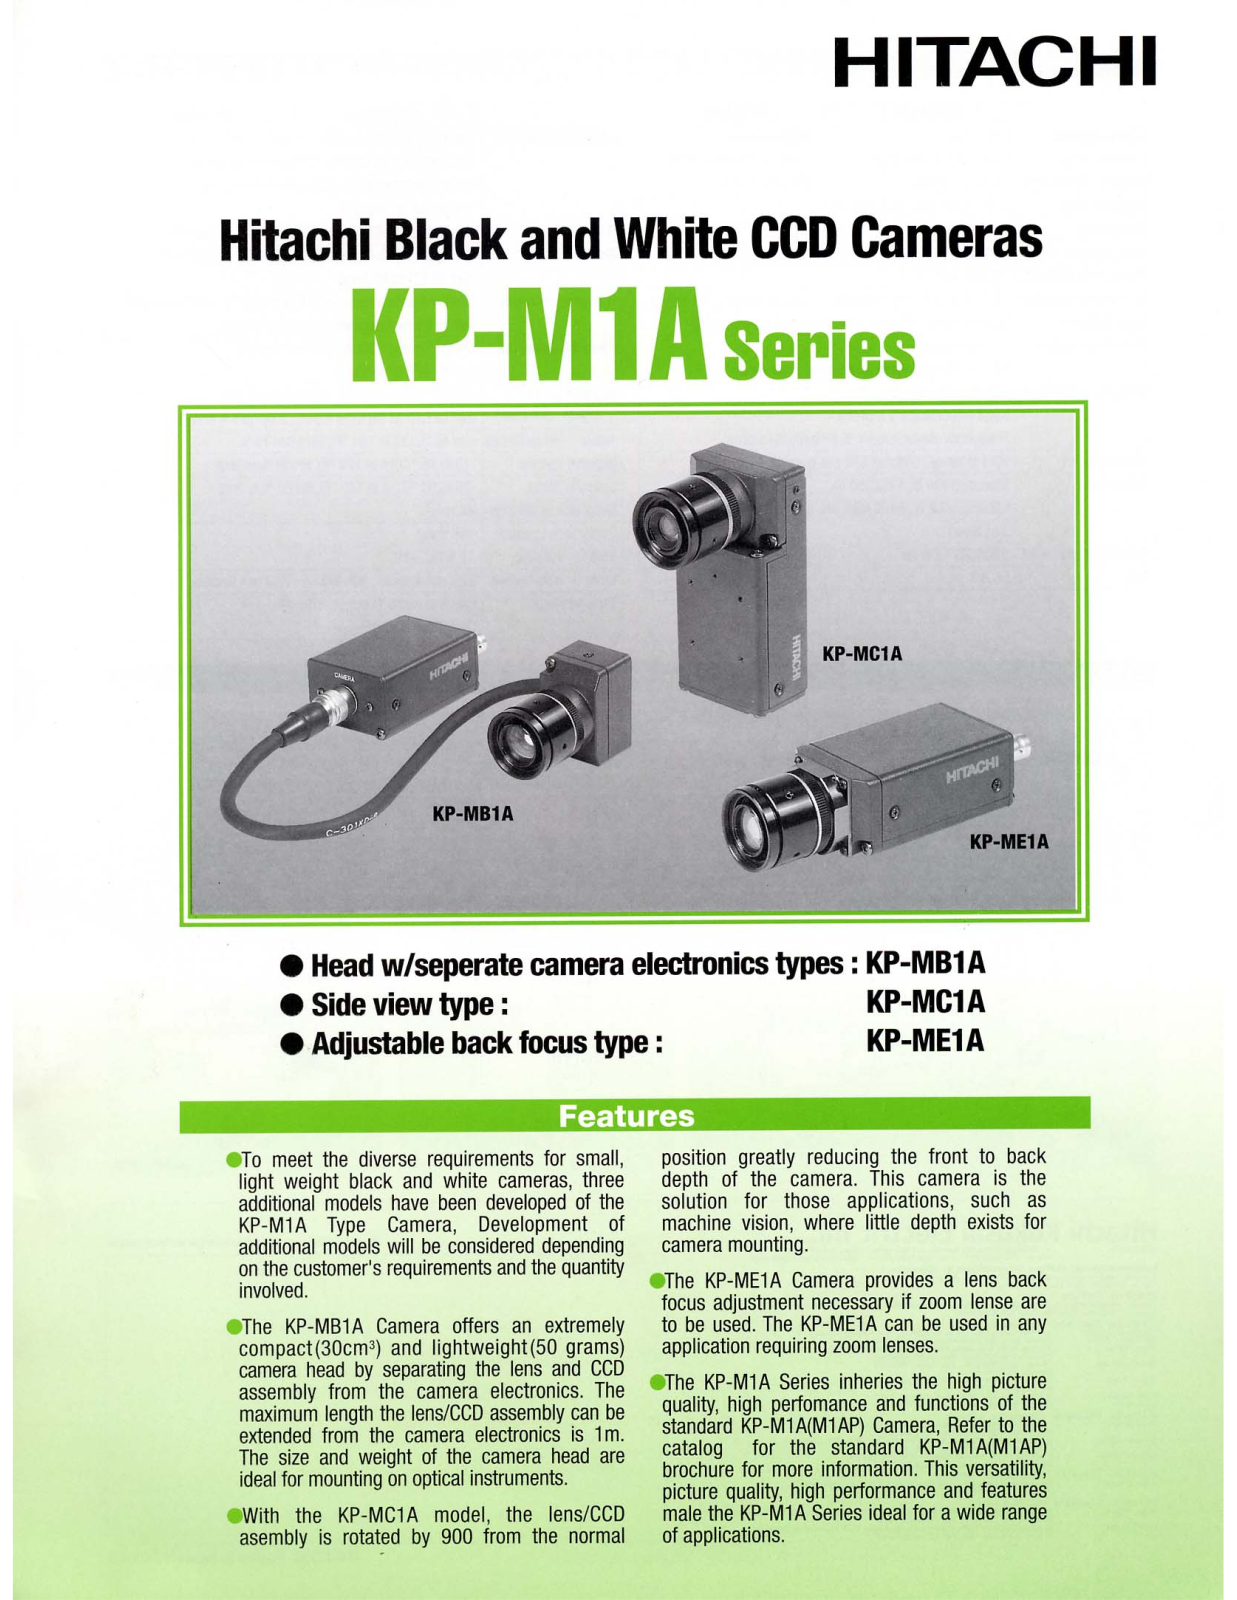 Hitachi kp-m1a User Manual